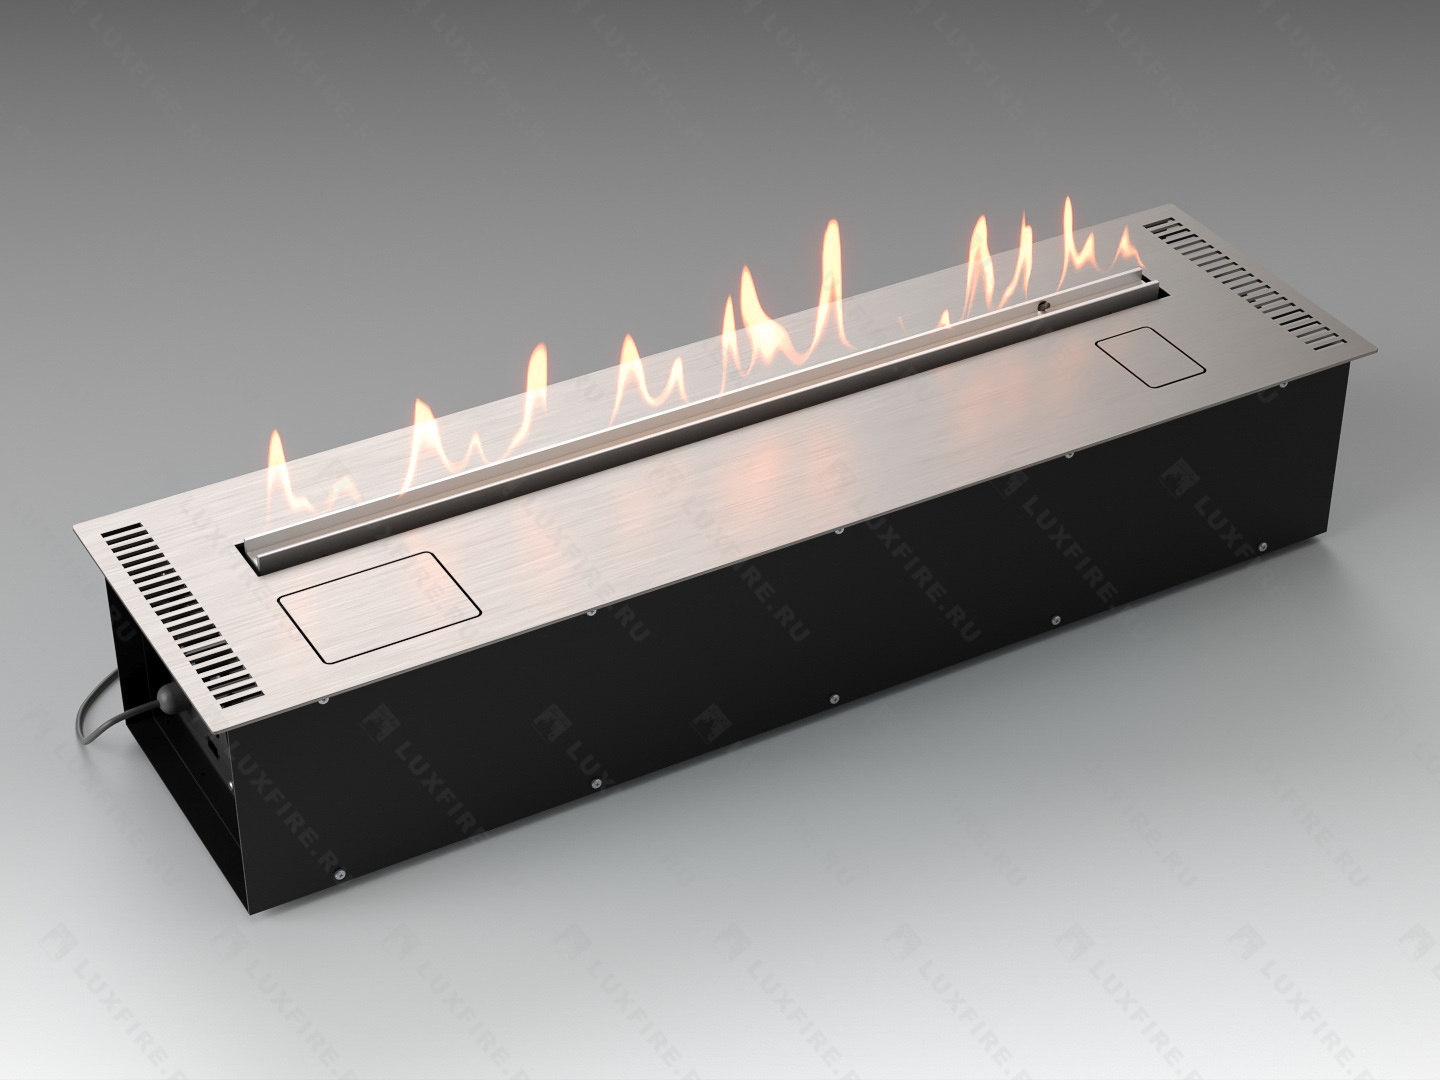 Автоматический биокамин Lux Fire Smart Flame 1000 RC INOX